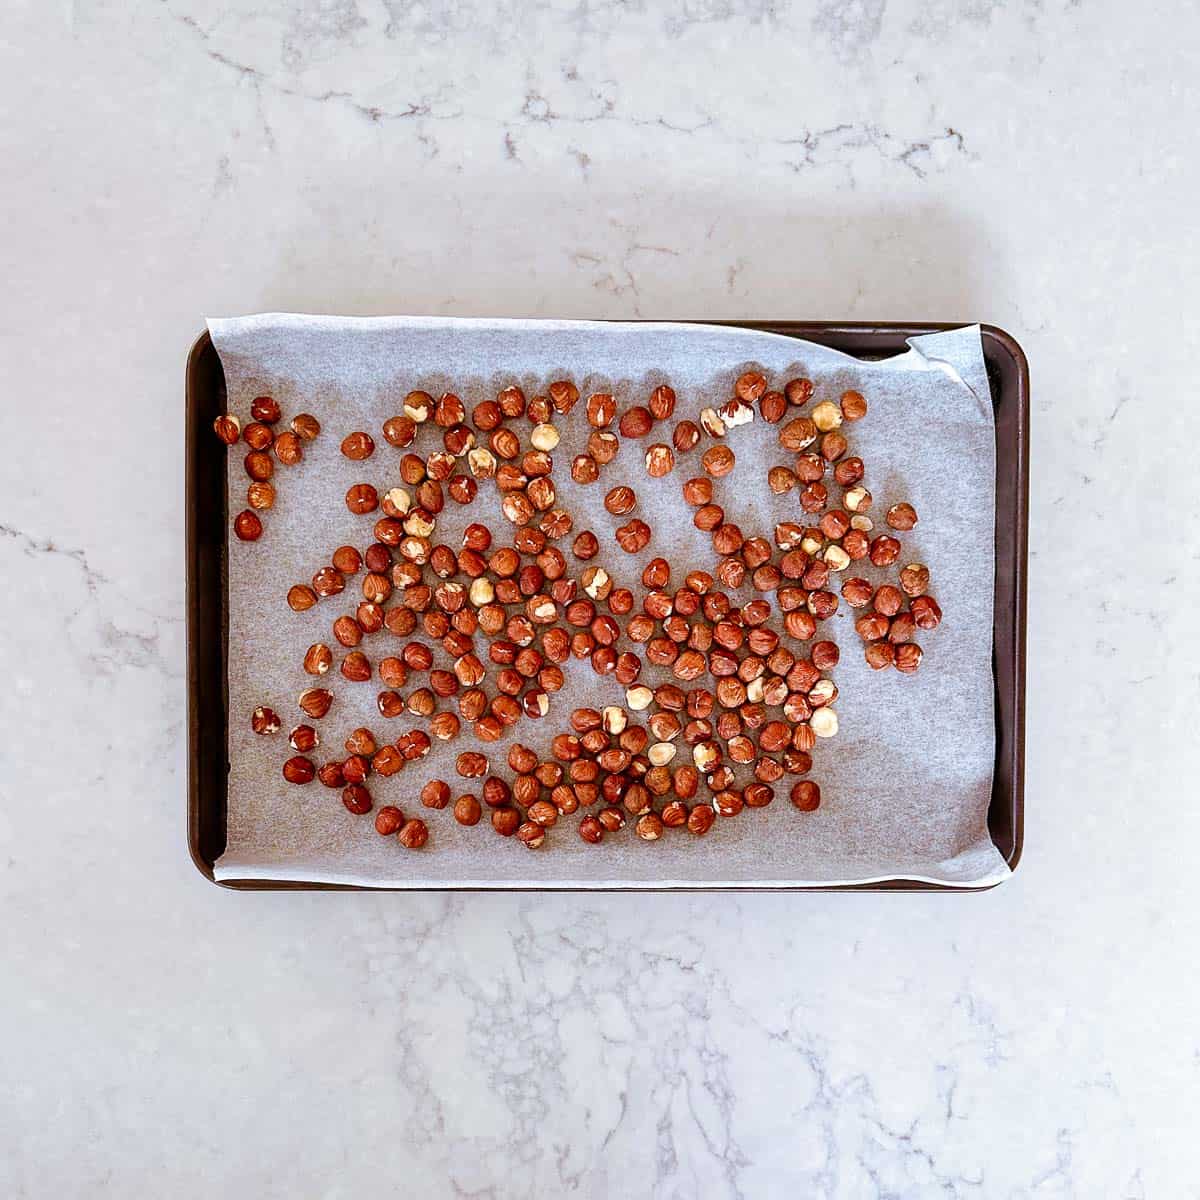 Raw hazelnuts on a baking tray.